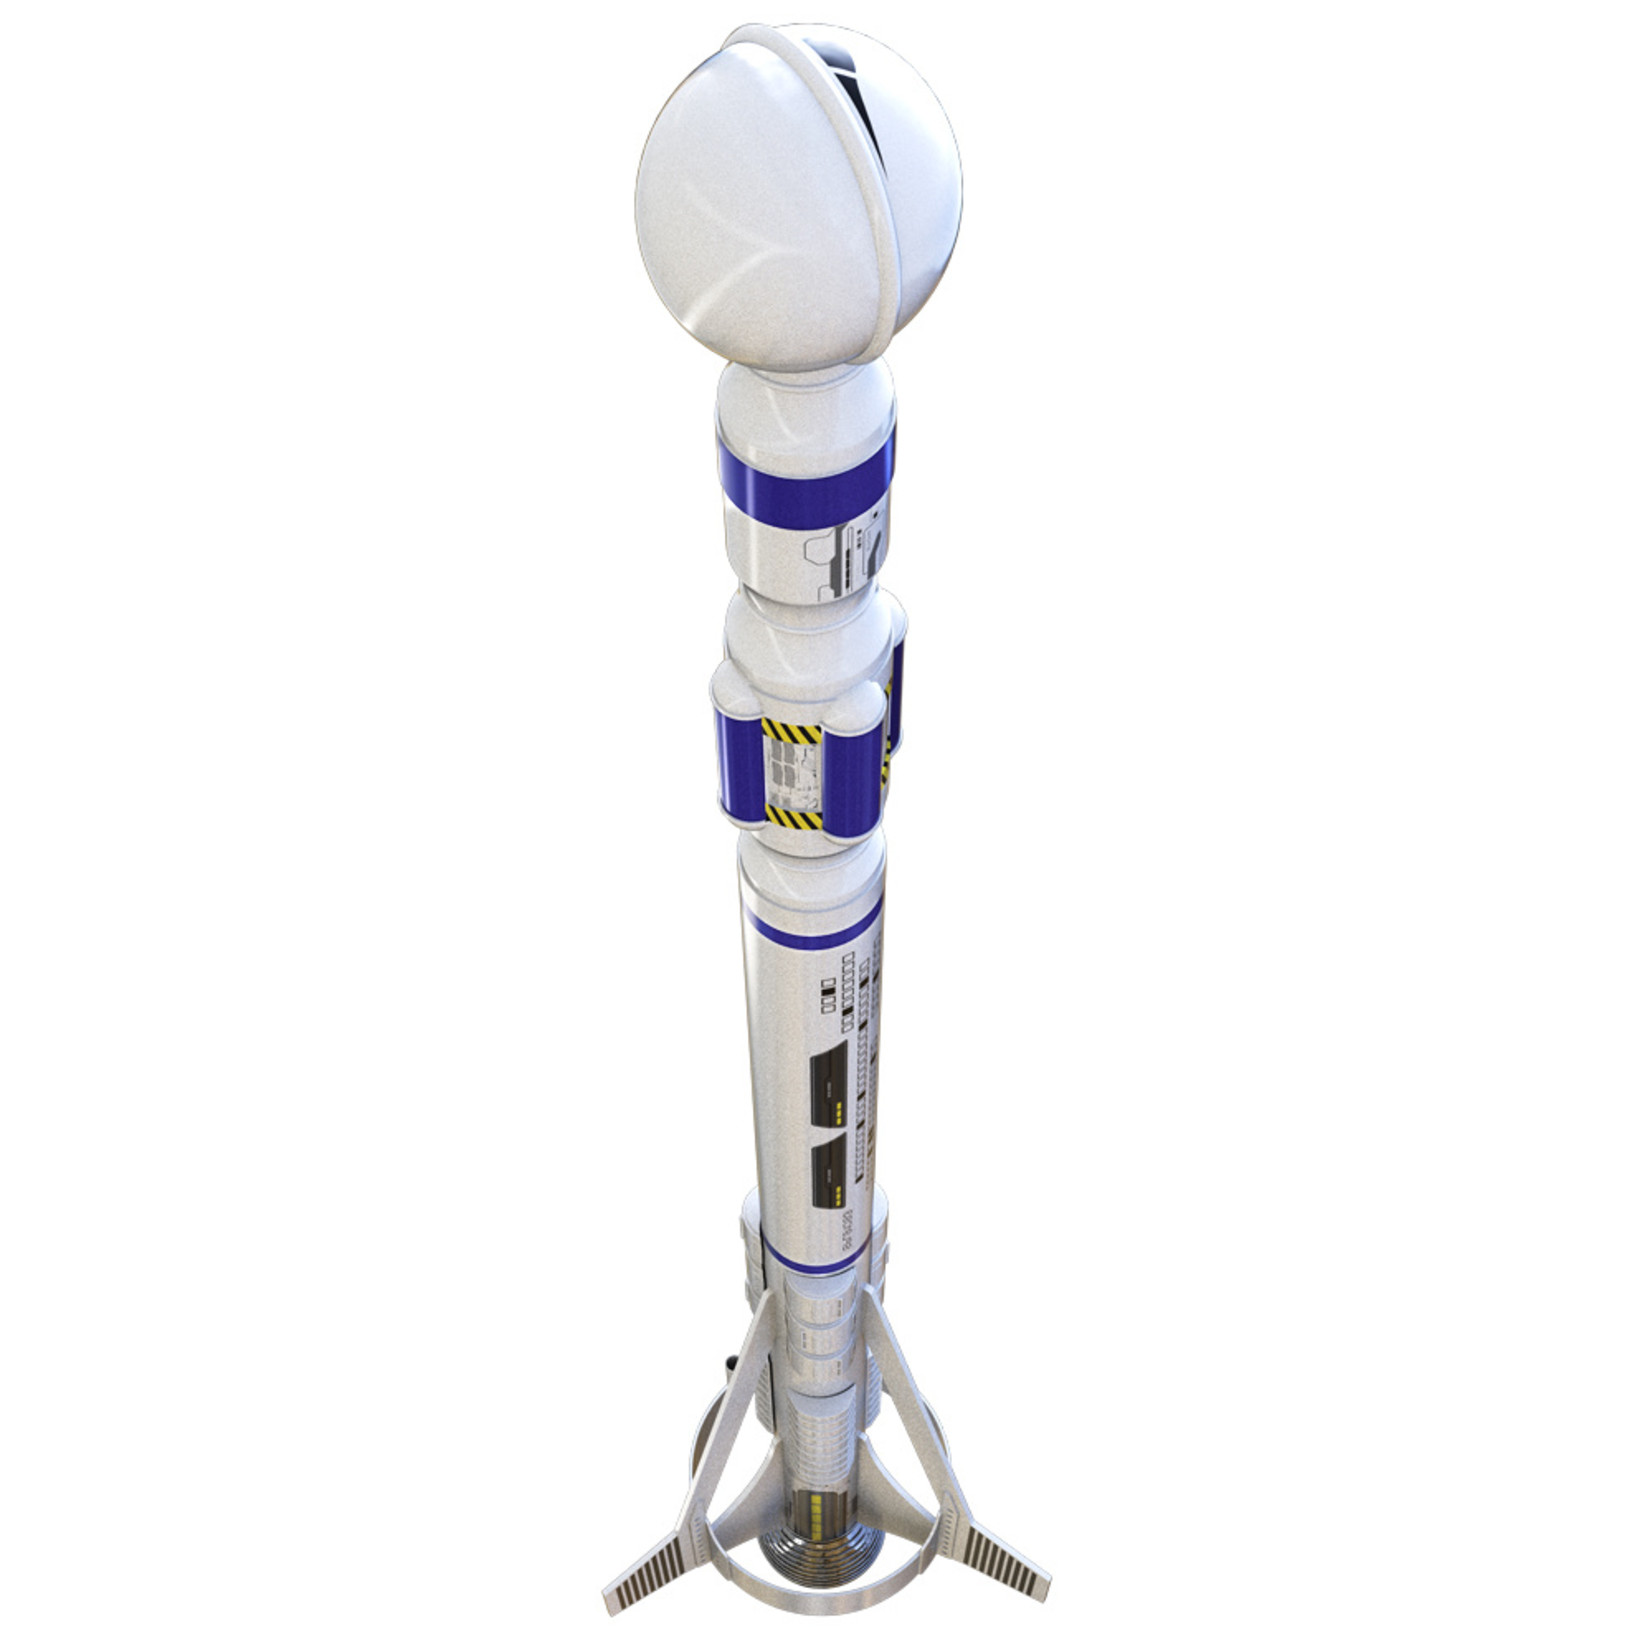 Estes Rockets EST7296  Destination Mars - Longship